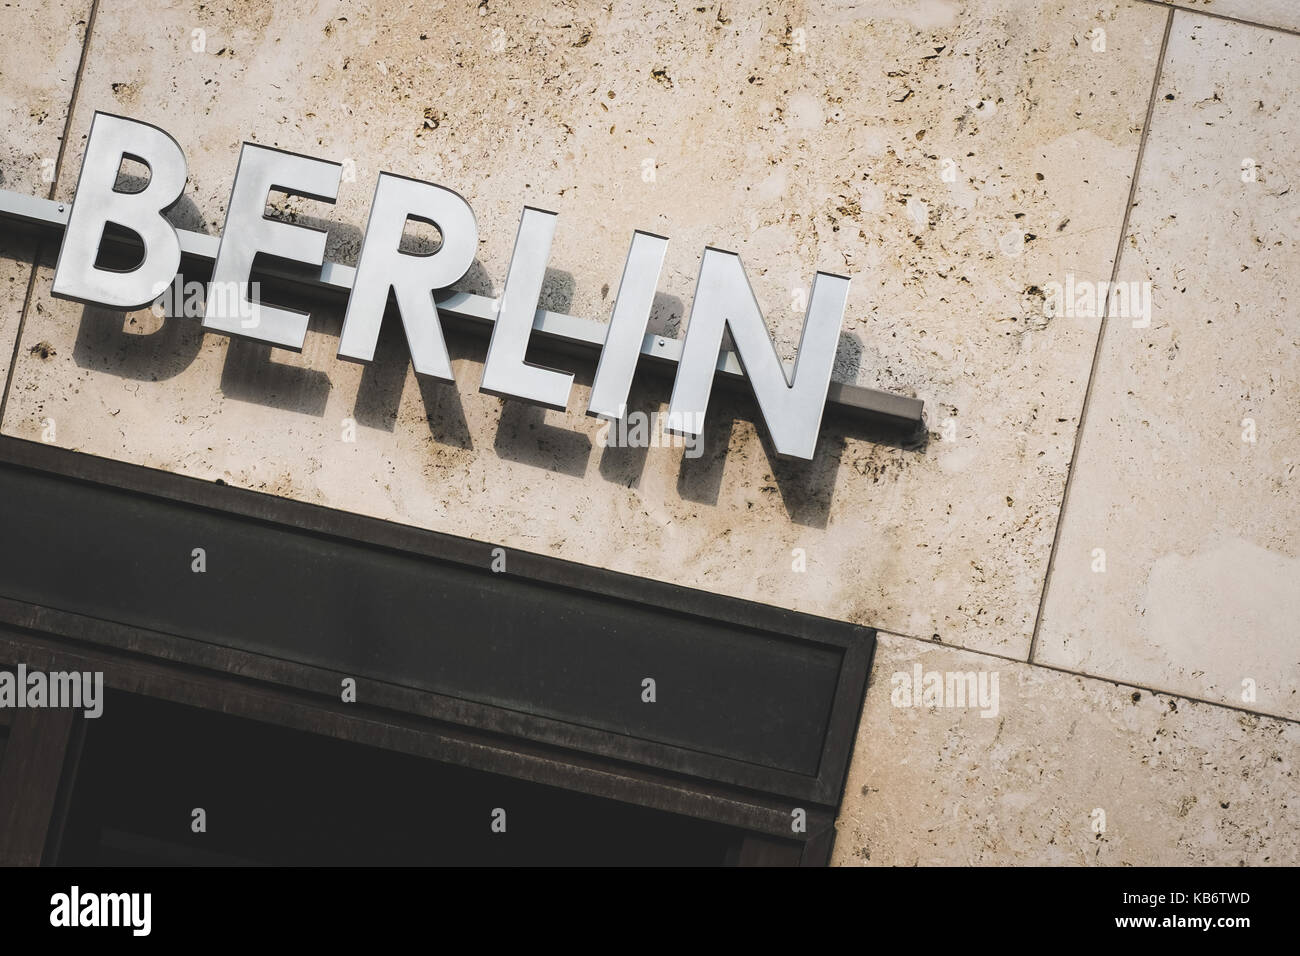 Berlin, letters on wall - Berlin, text Stock Photo